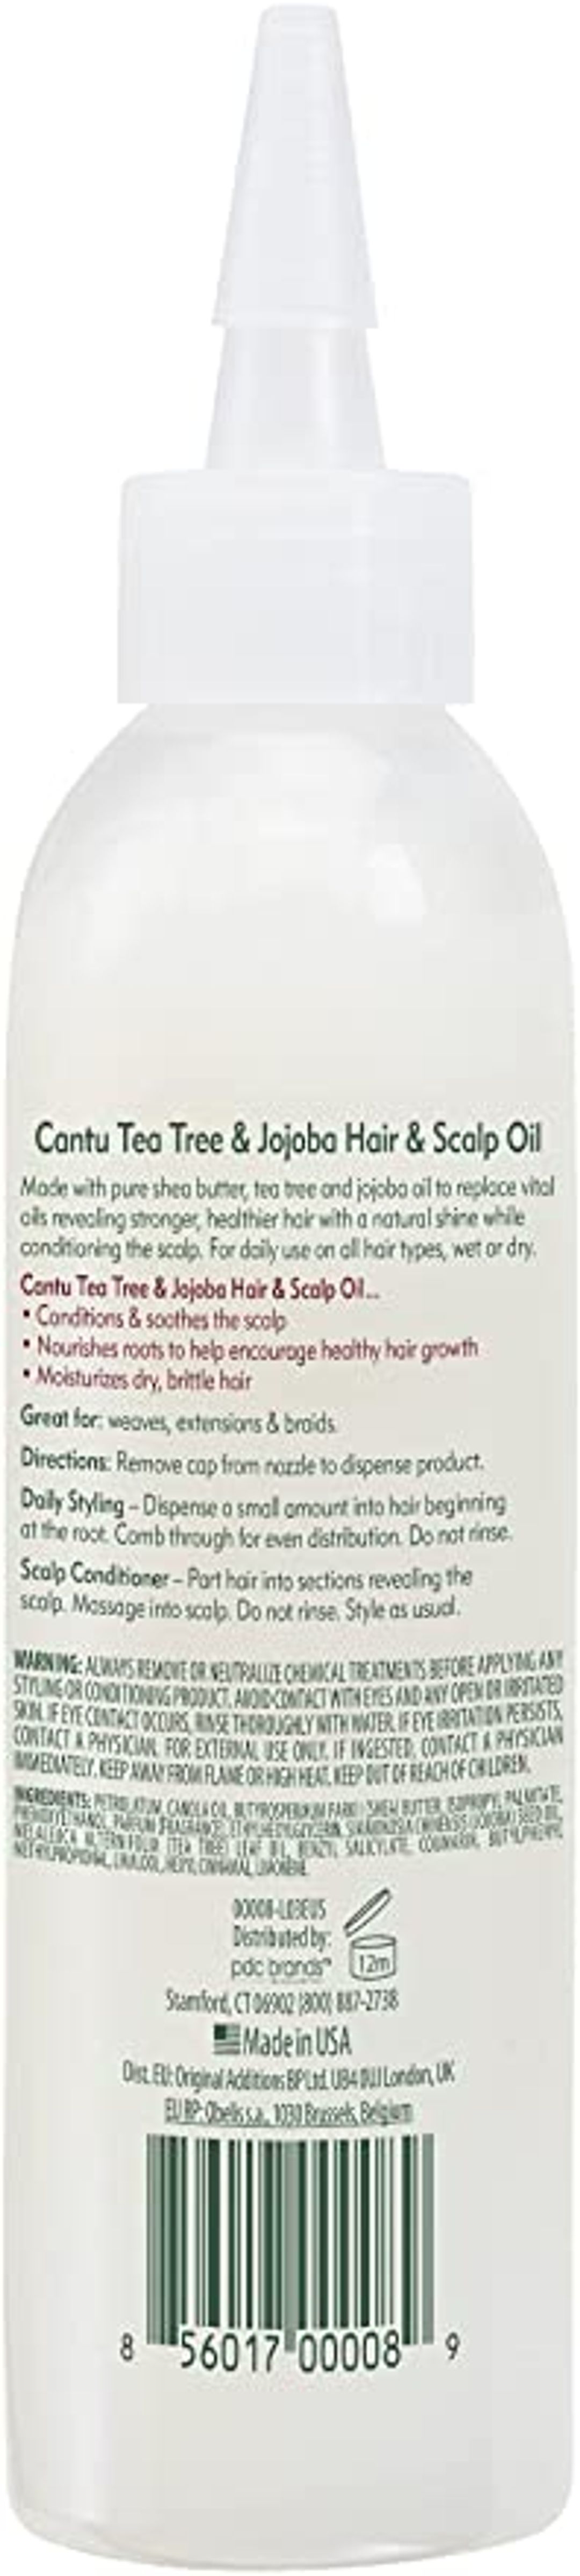 Cantu Shea Butter Tea Tree & Jojoba Hair & Scalp Oil - 180ml